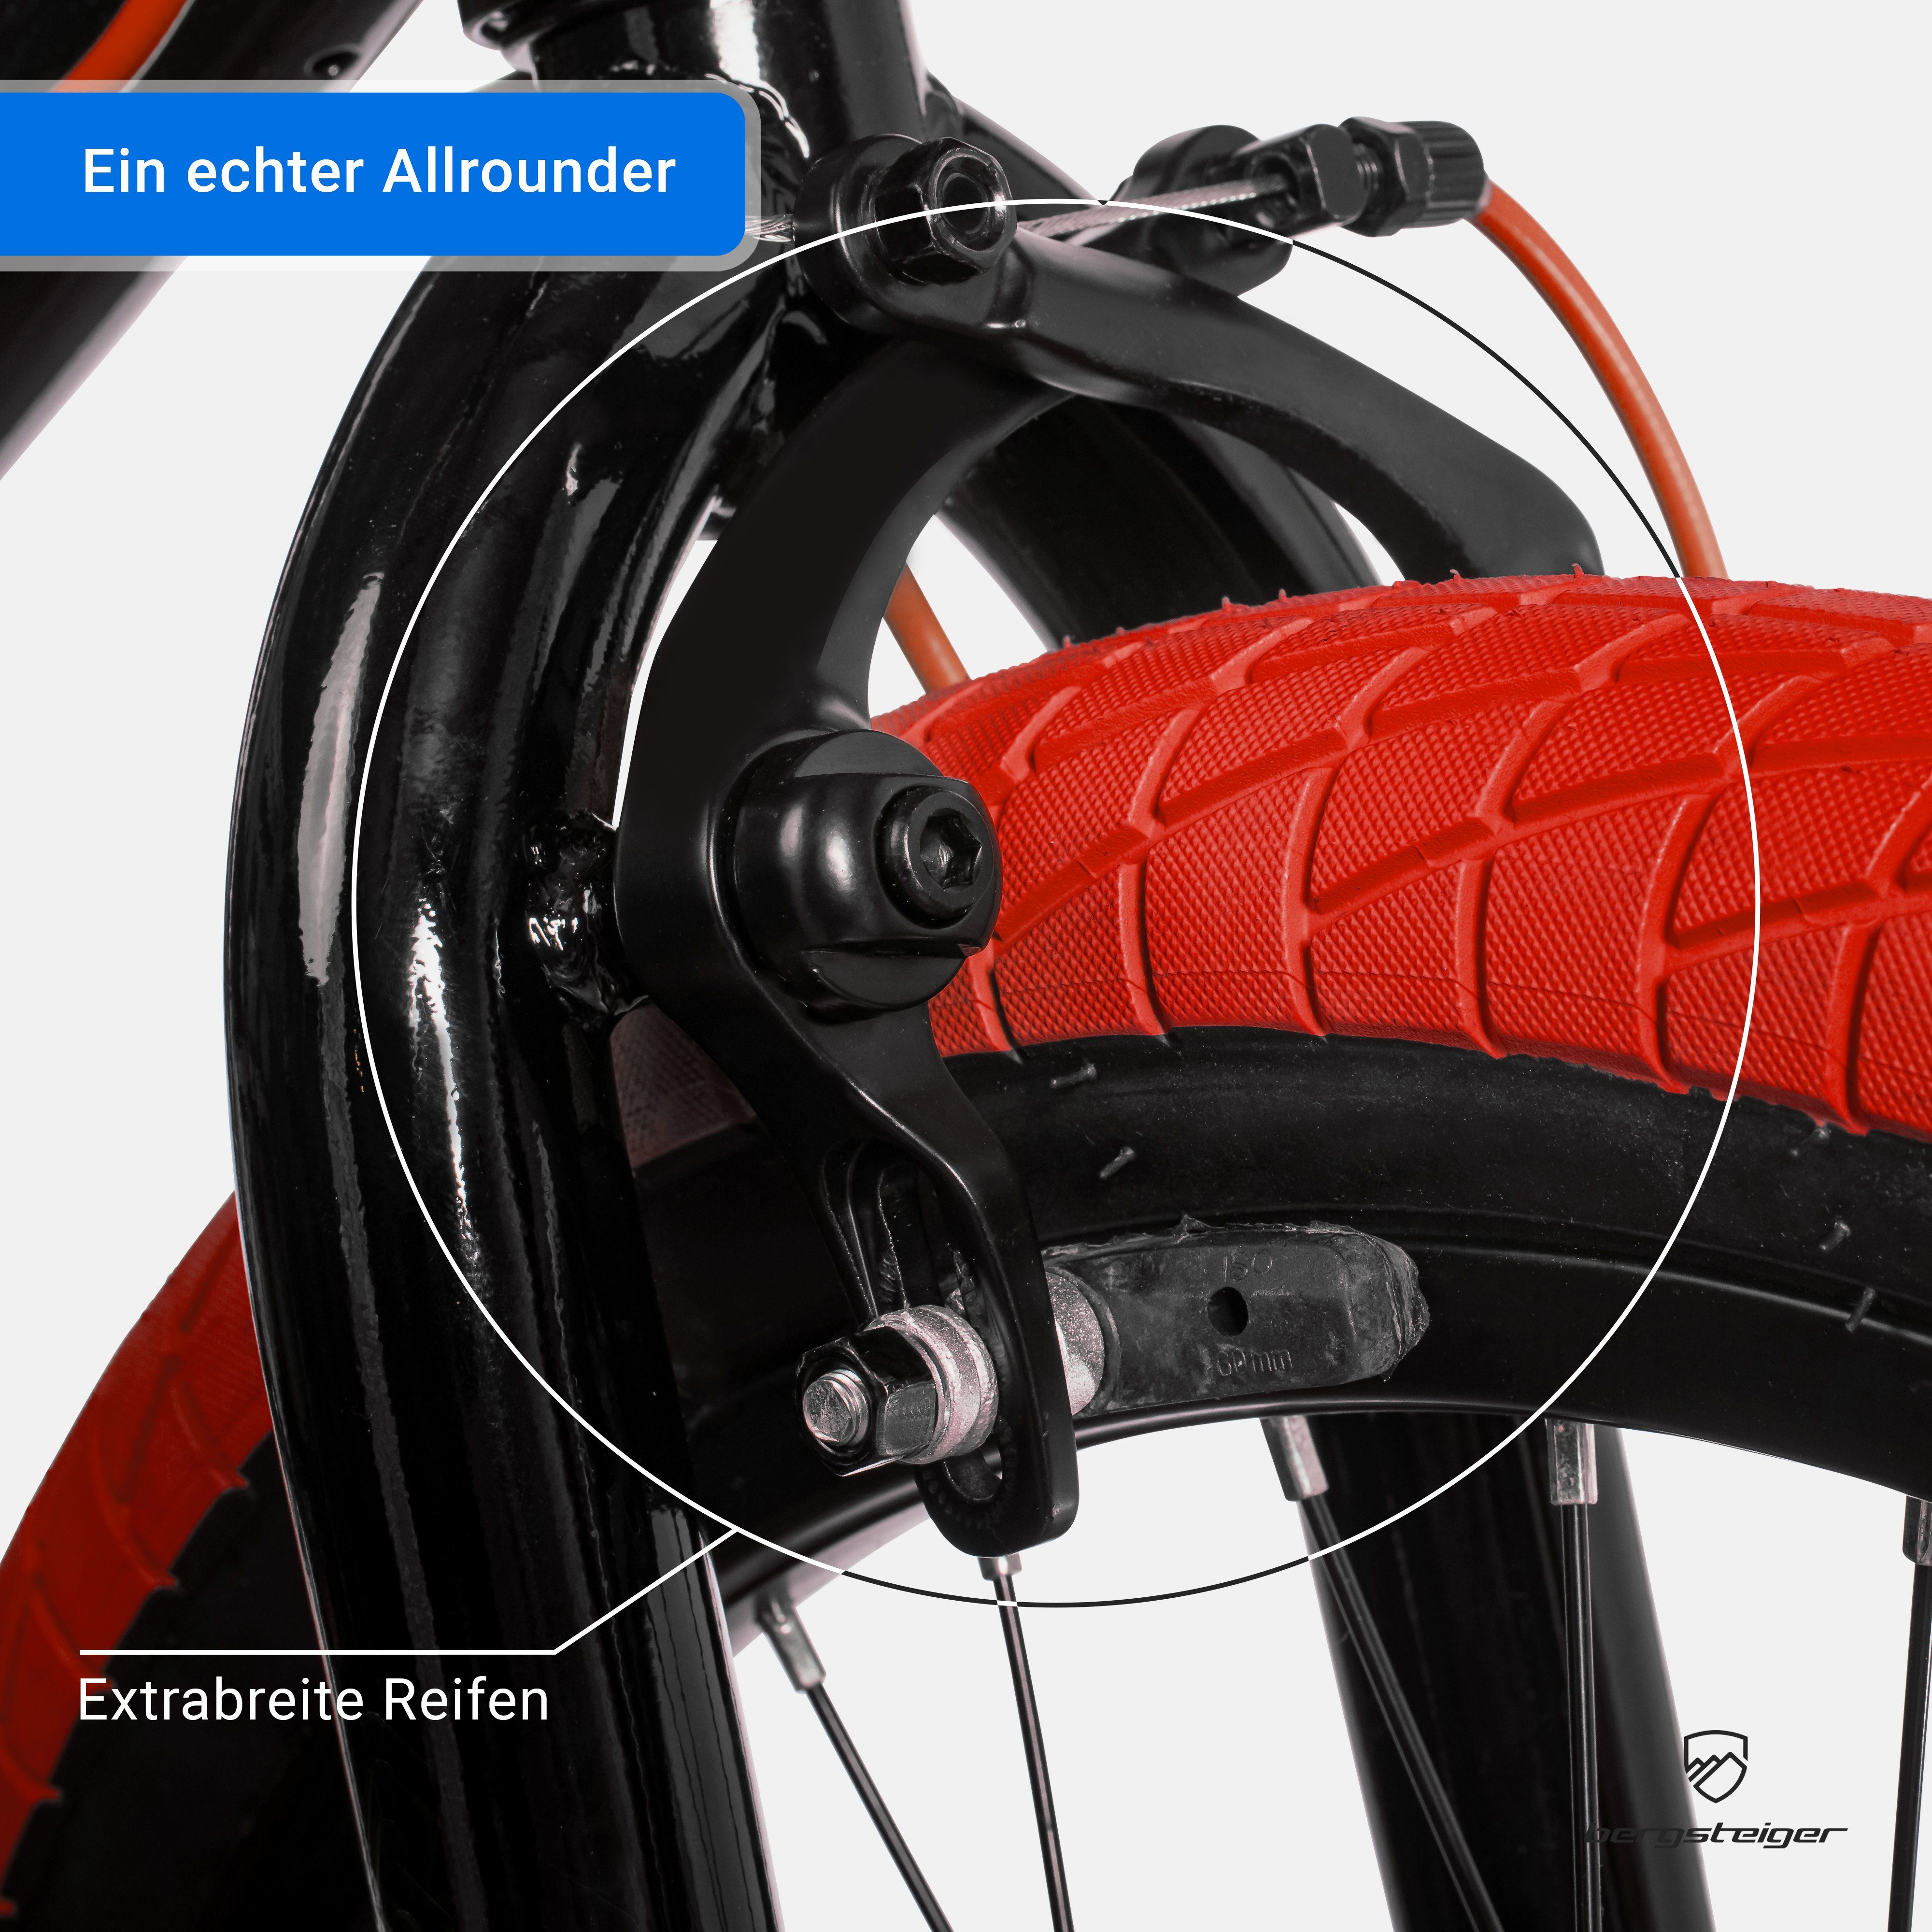 bergsteiger BMX-Rad Halifax 20 Zoll Gang Freestyle, Rotor-System, 360° BMX, 1 Fatbike